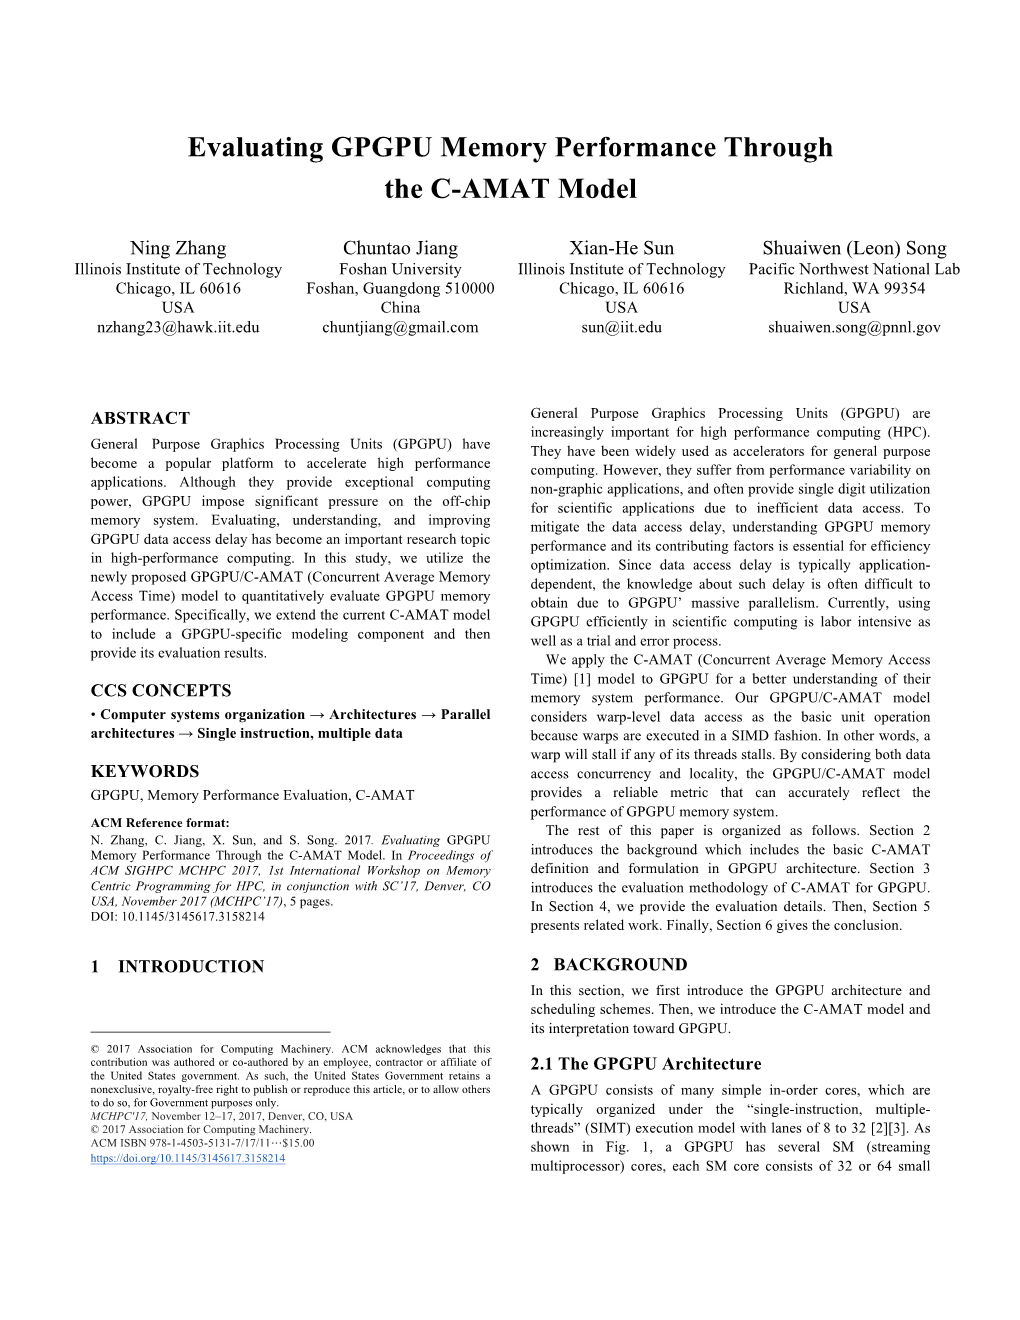 Evaluating GPGPU Memory Performance Through the C-AMAT Model